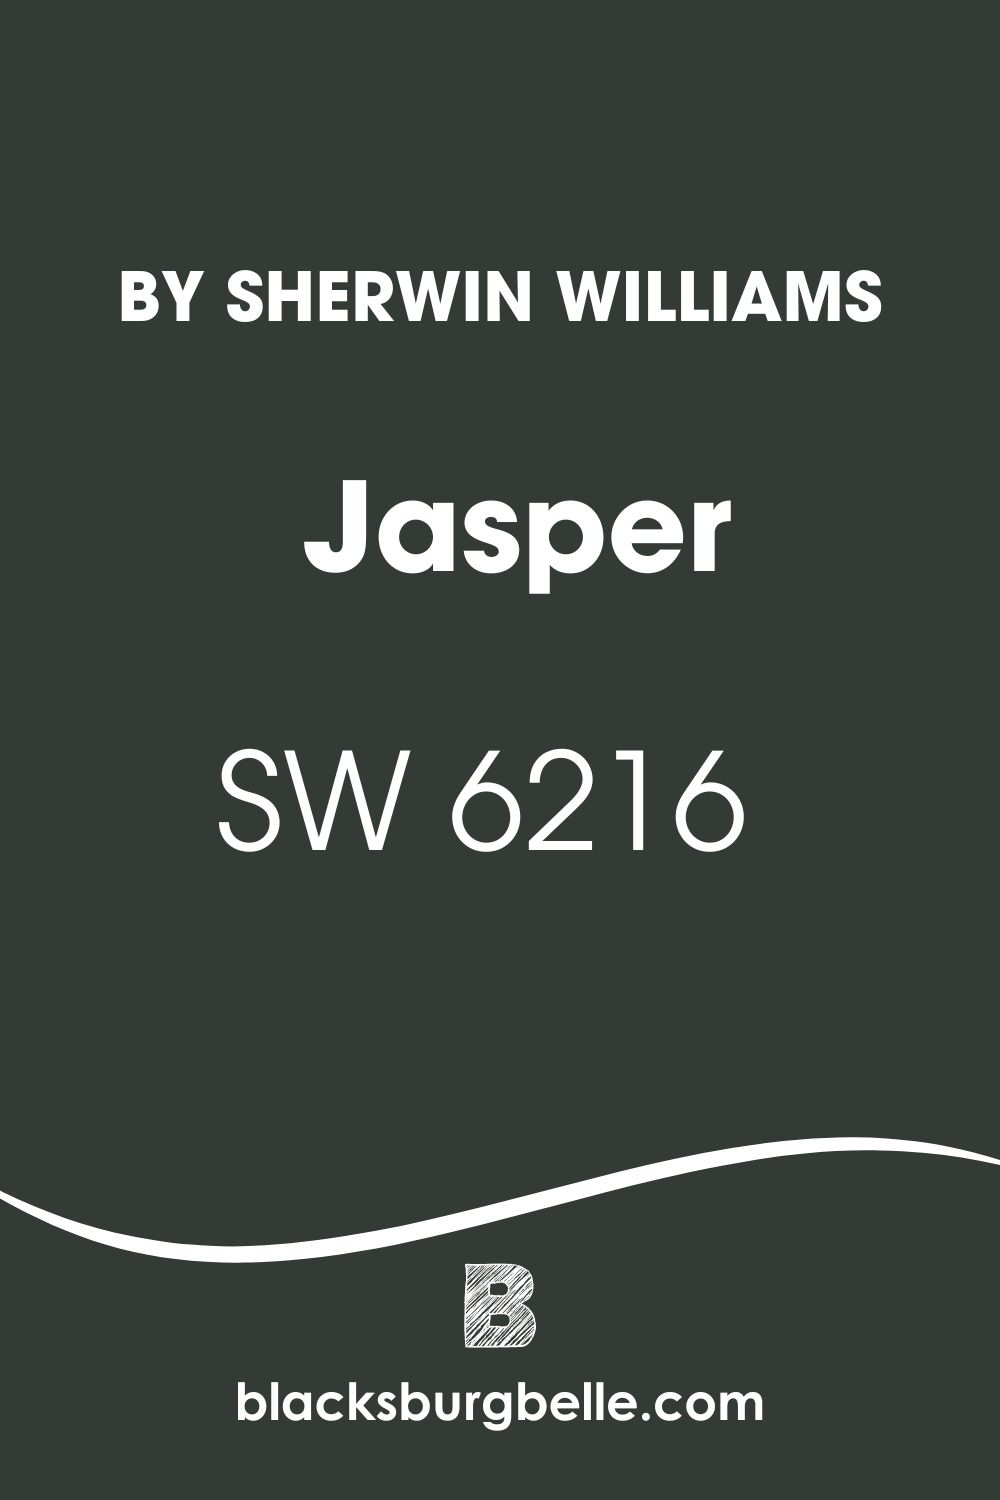 Sherwin Williams Jasper SW 6216